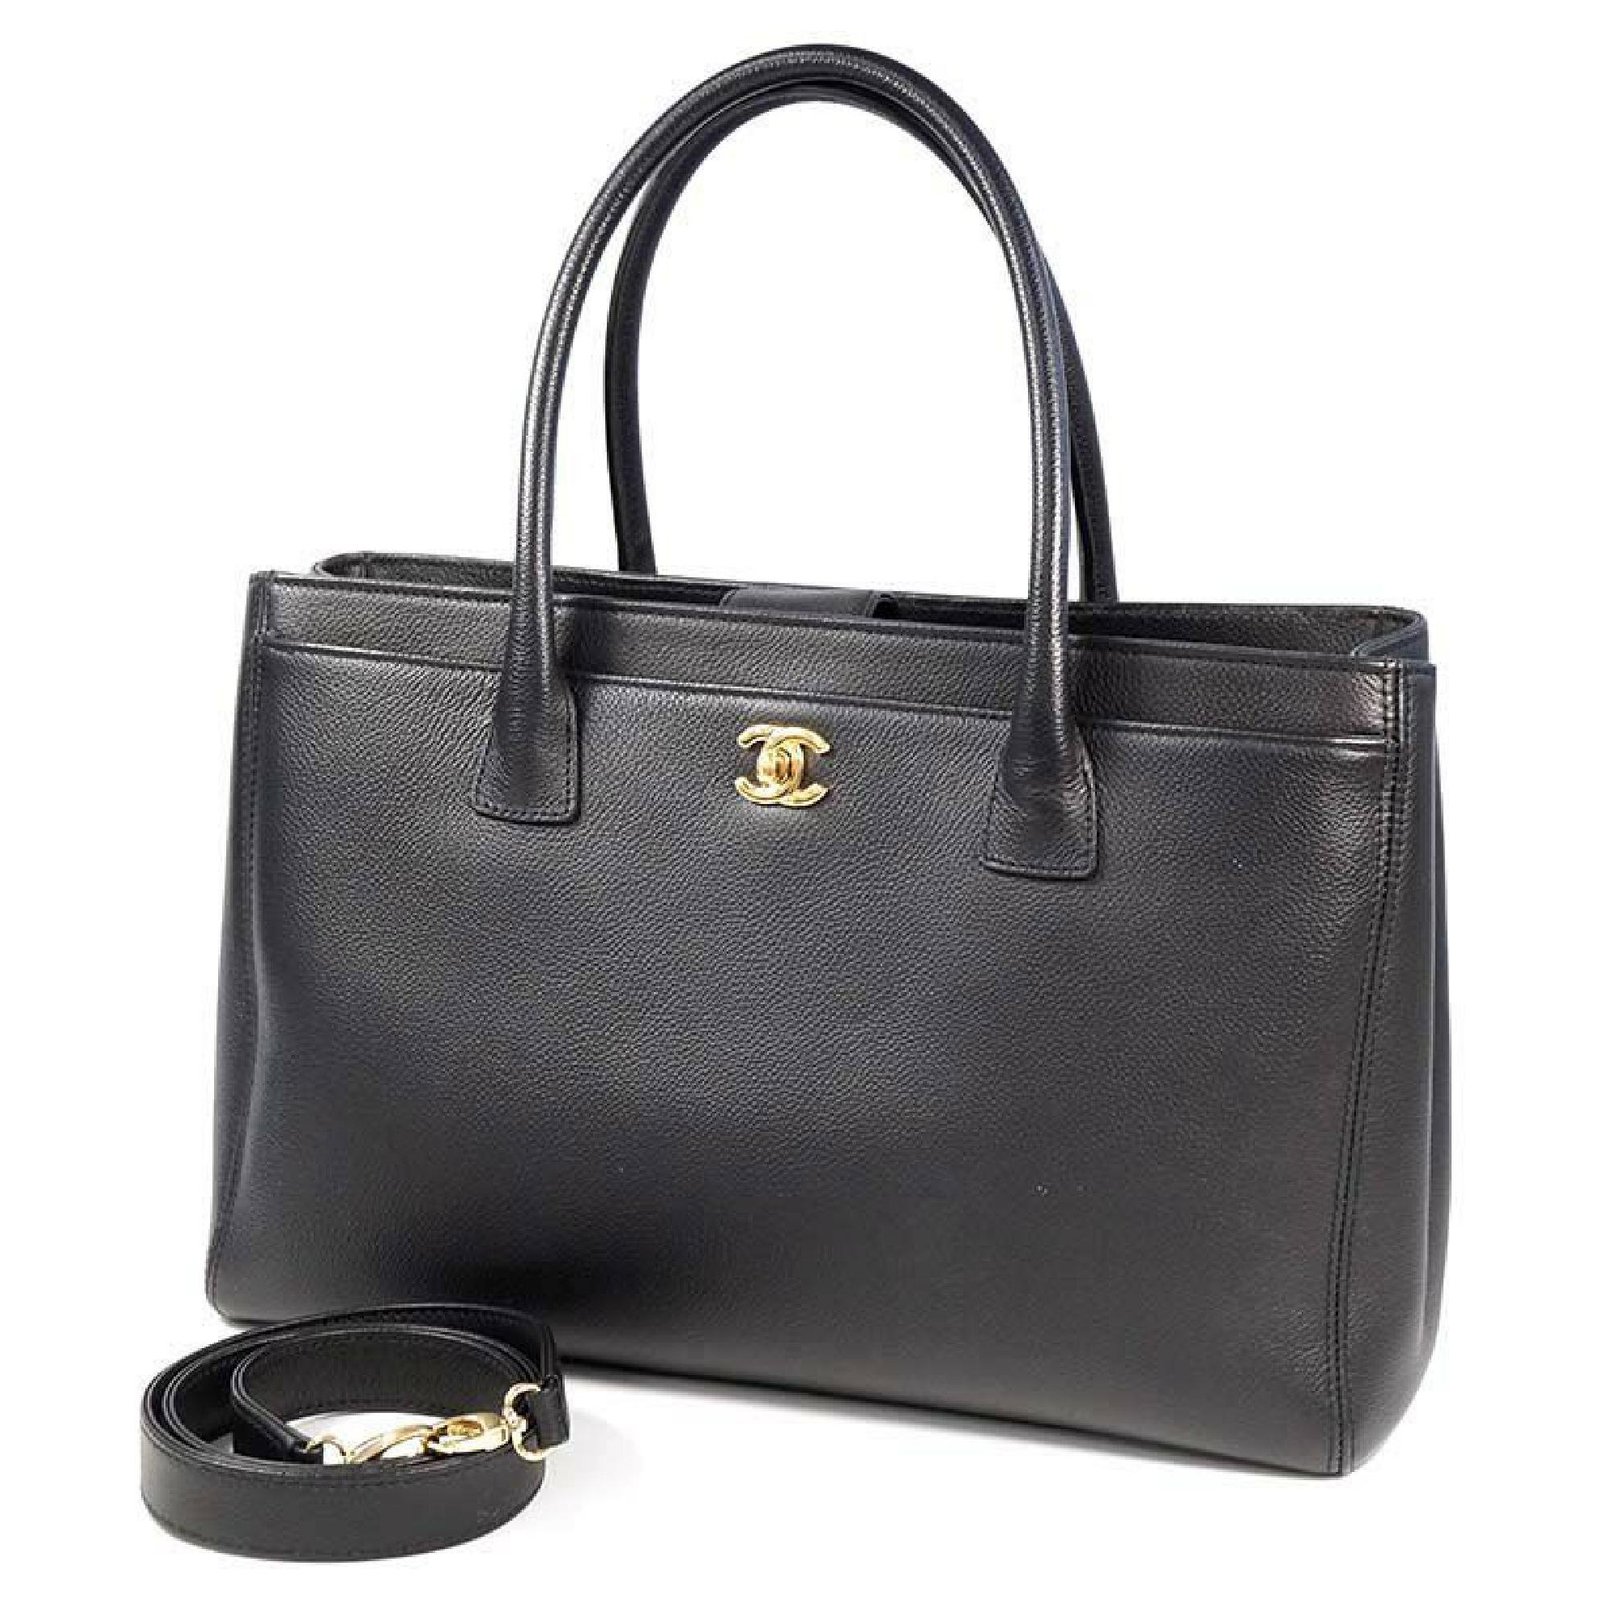 Chanel Executive Tote Bag White Leather Handbag Golden Hardware Caviar